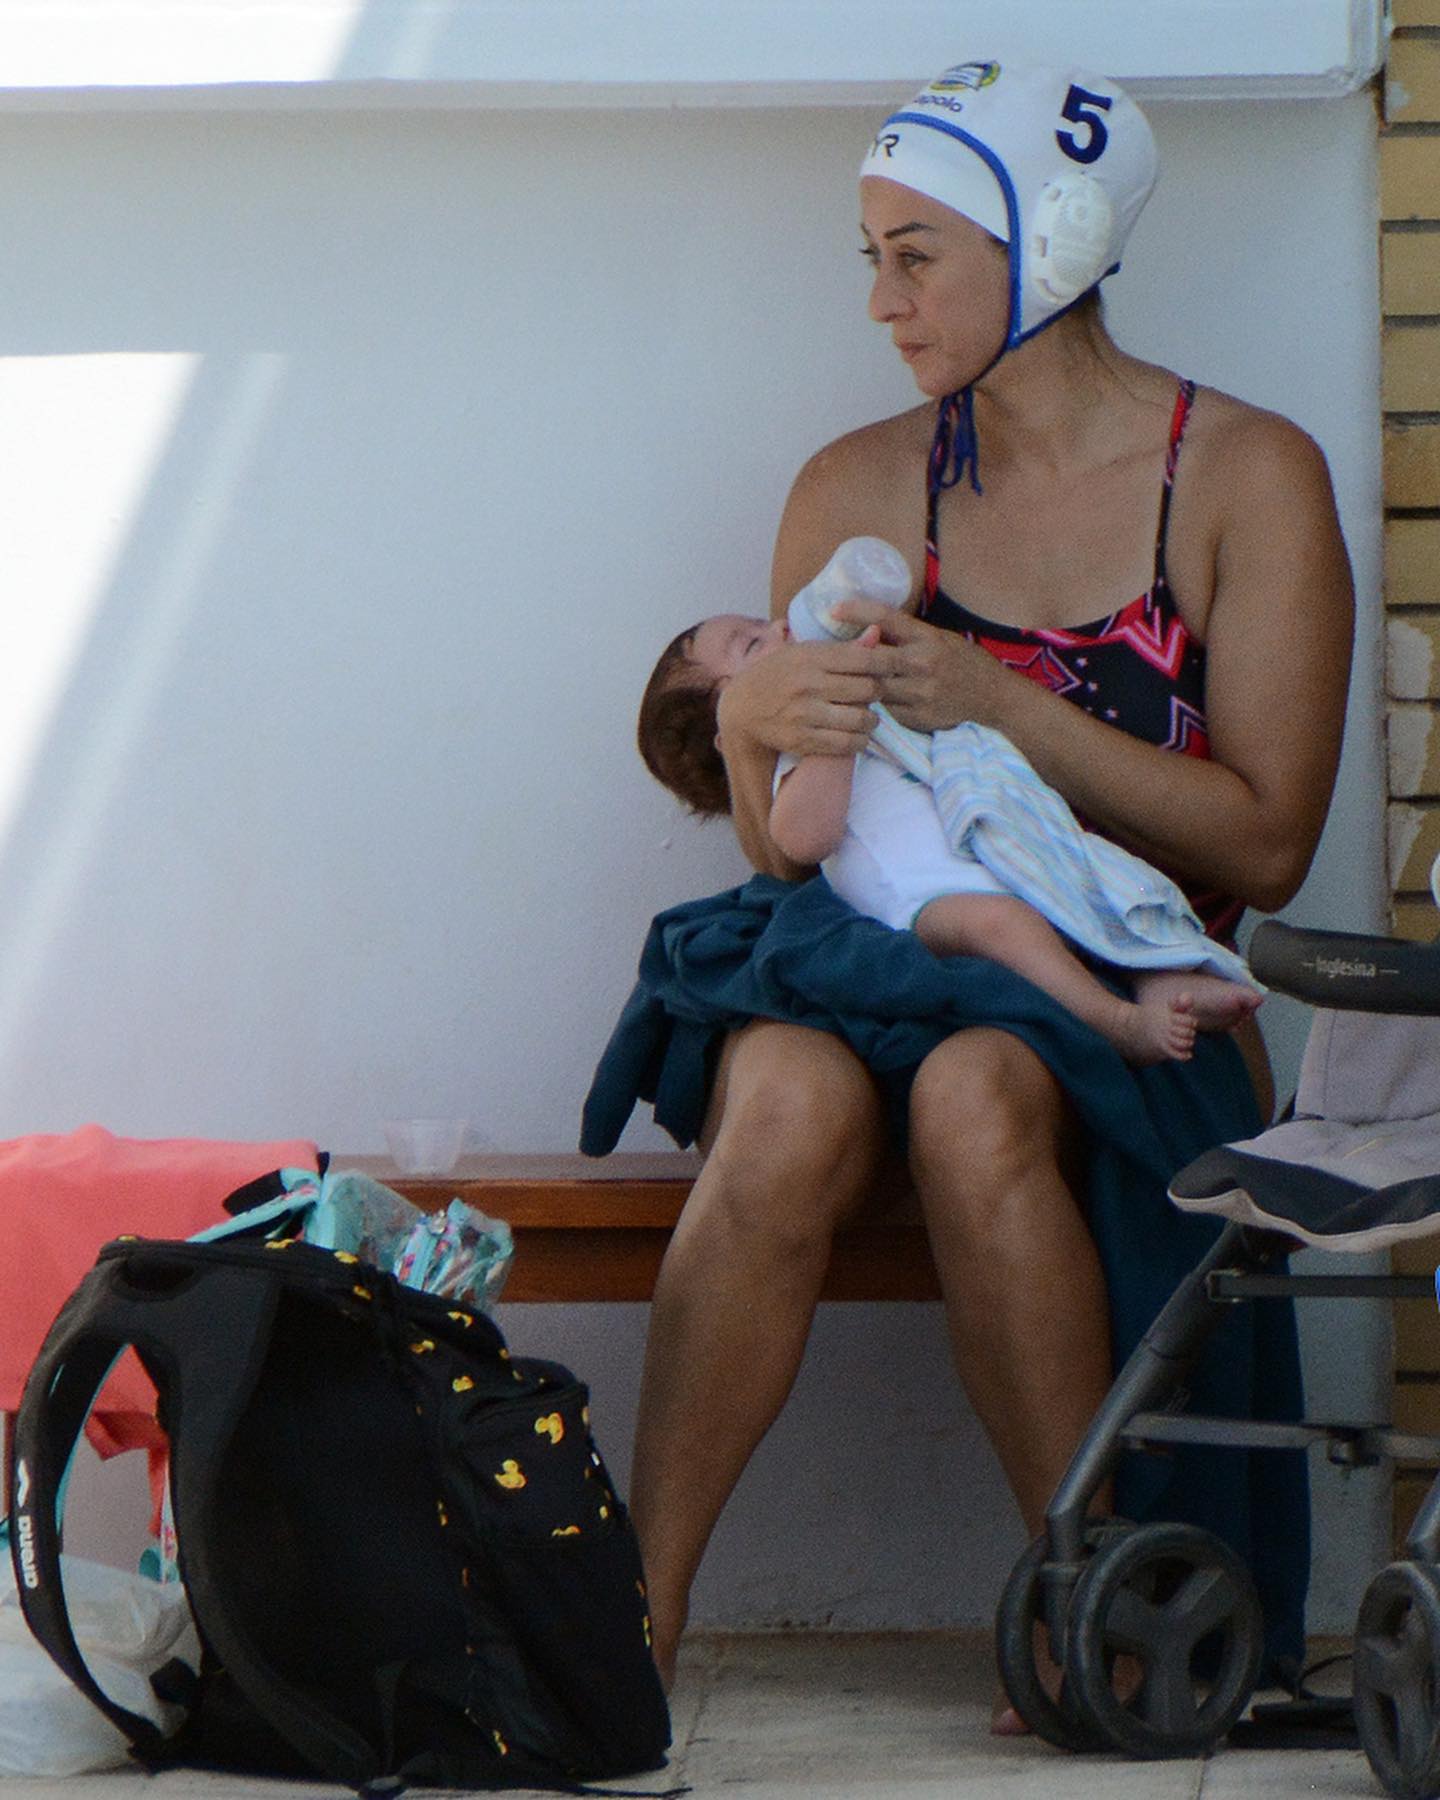 Greek water polo player feeding baby